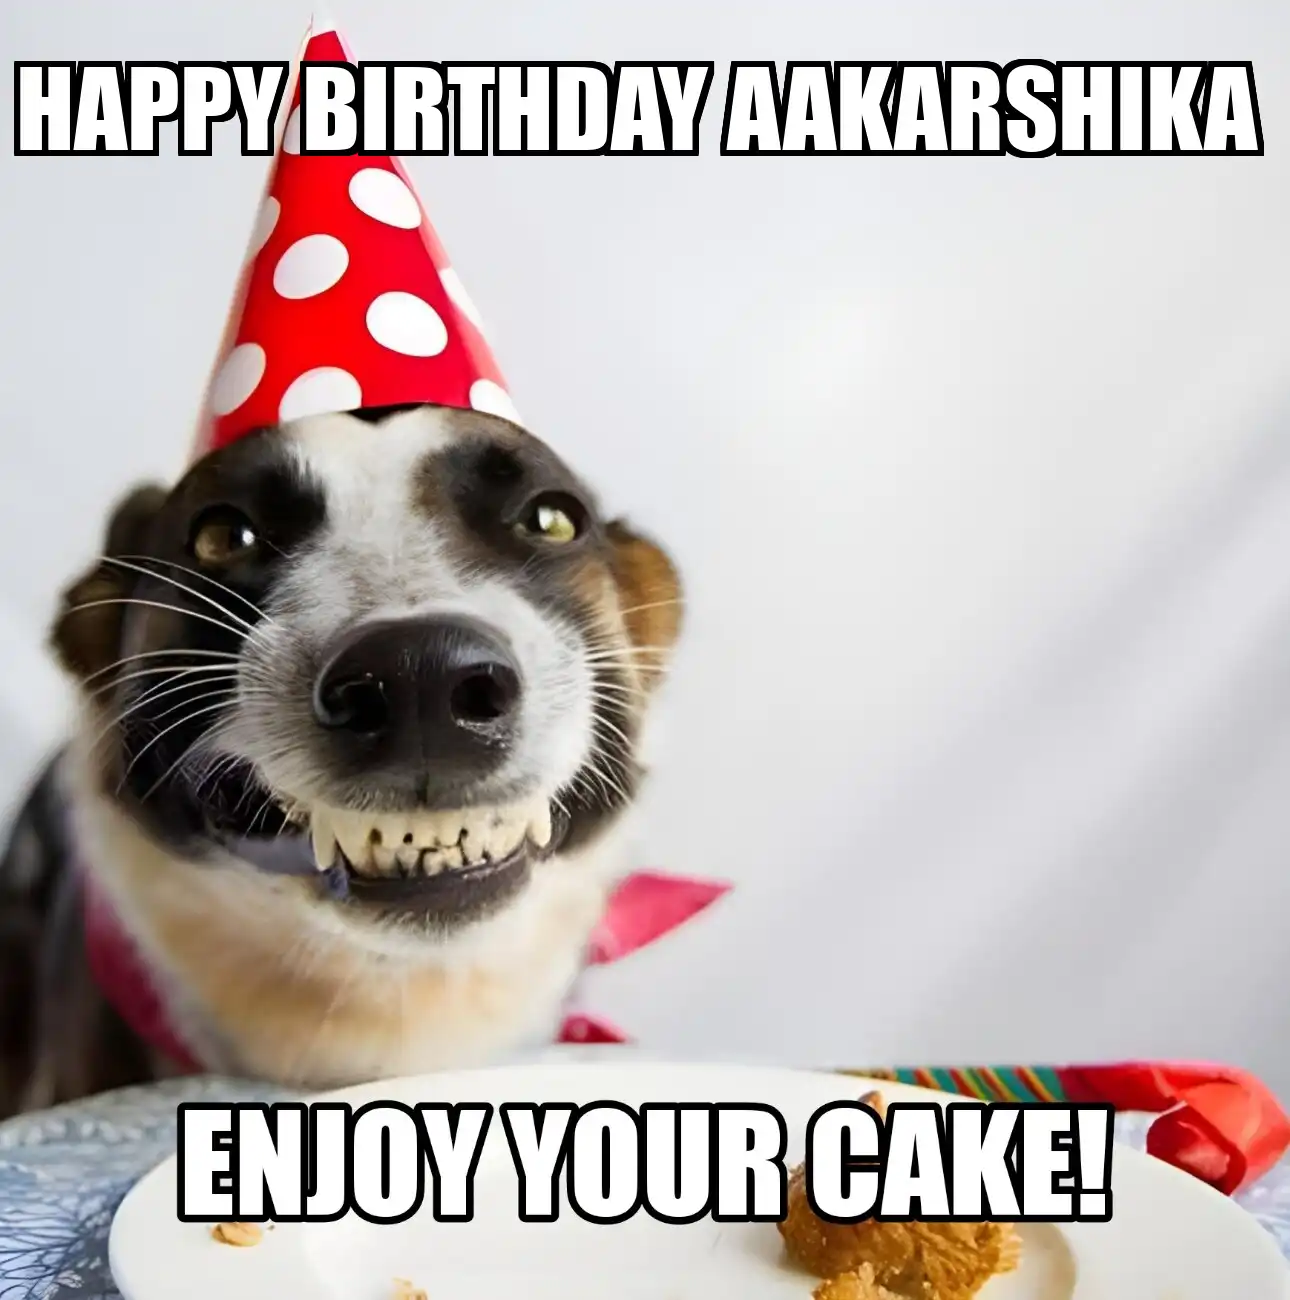 Happy Birthday Aakarshika Enjoy Your Cake Dog Meme